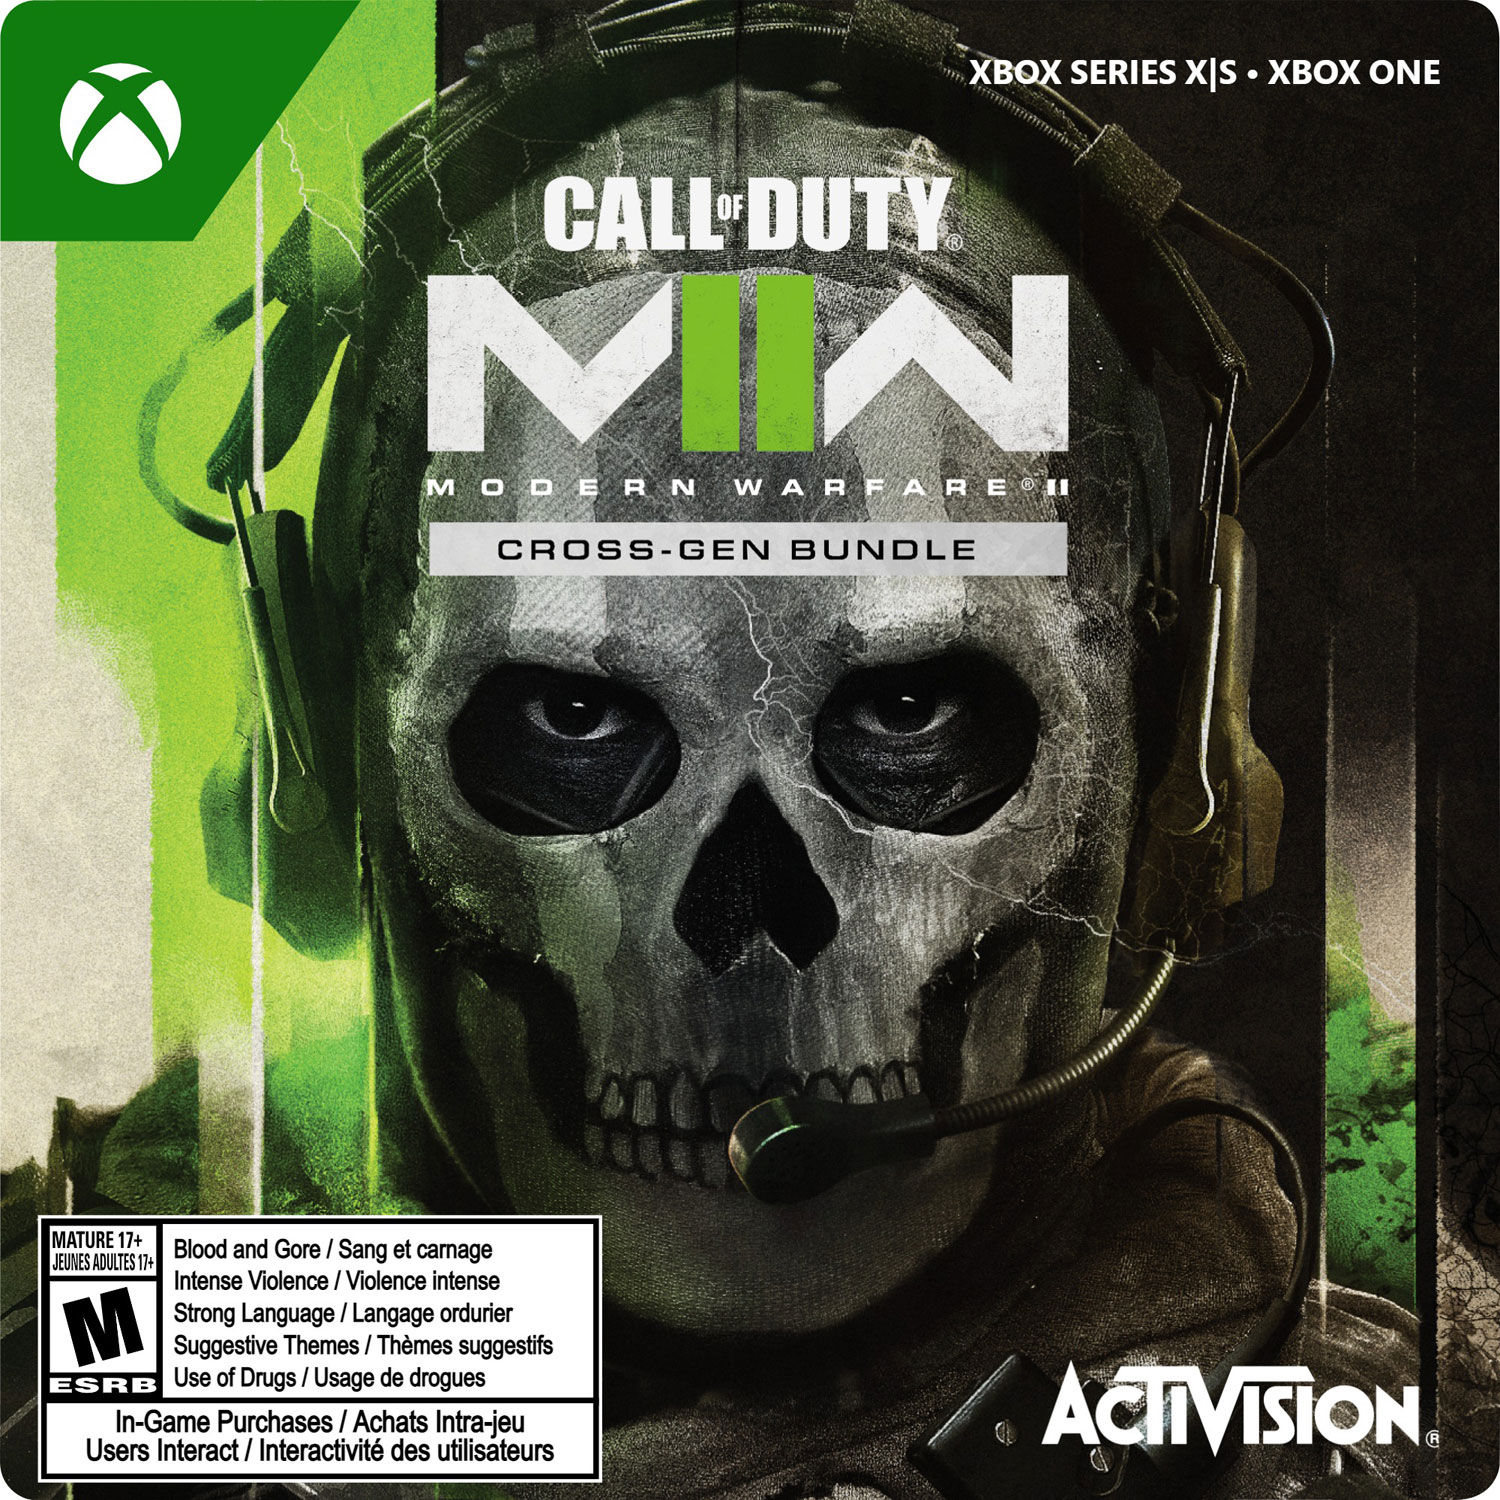 Call of Duty: Modern Warfare II (Xbox Series X|S / Xbox One) - Digital Download